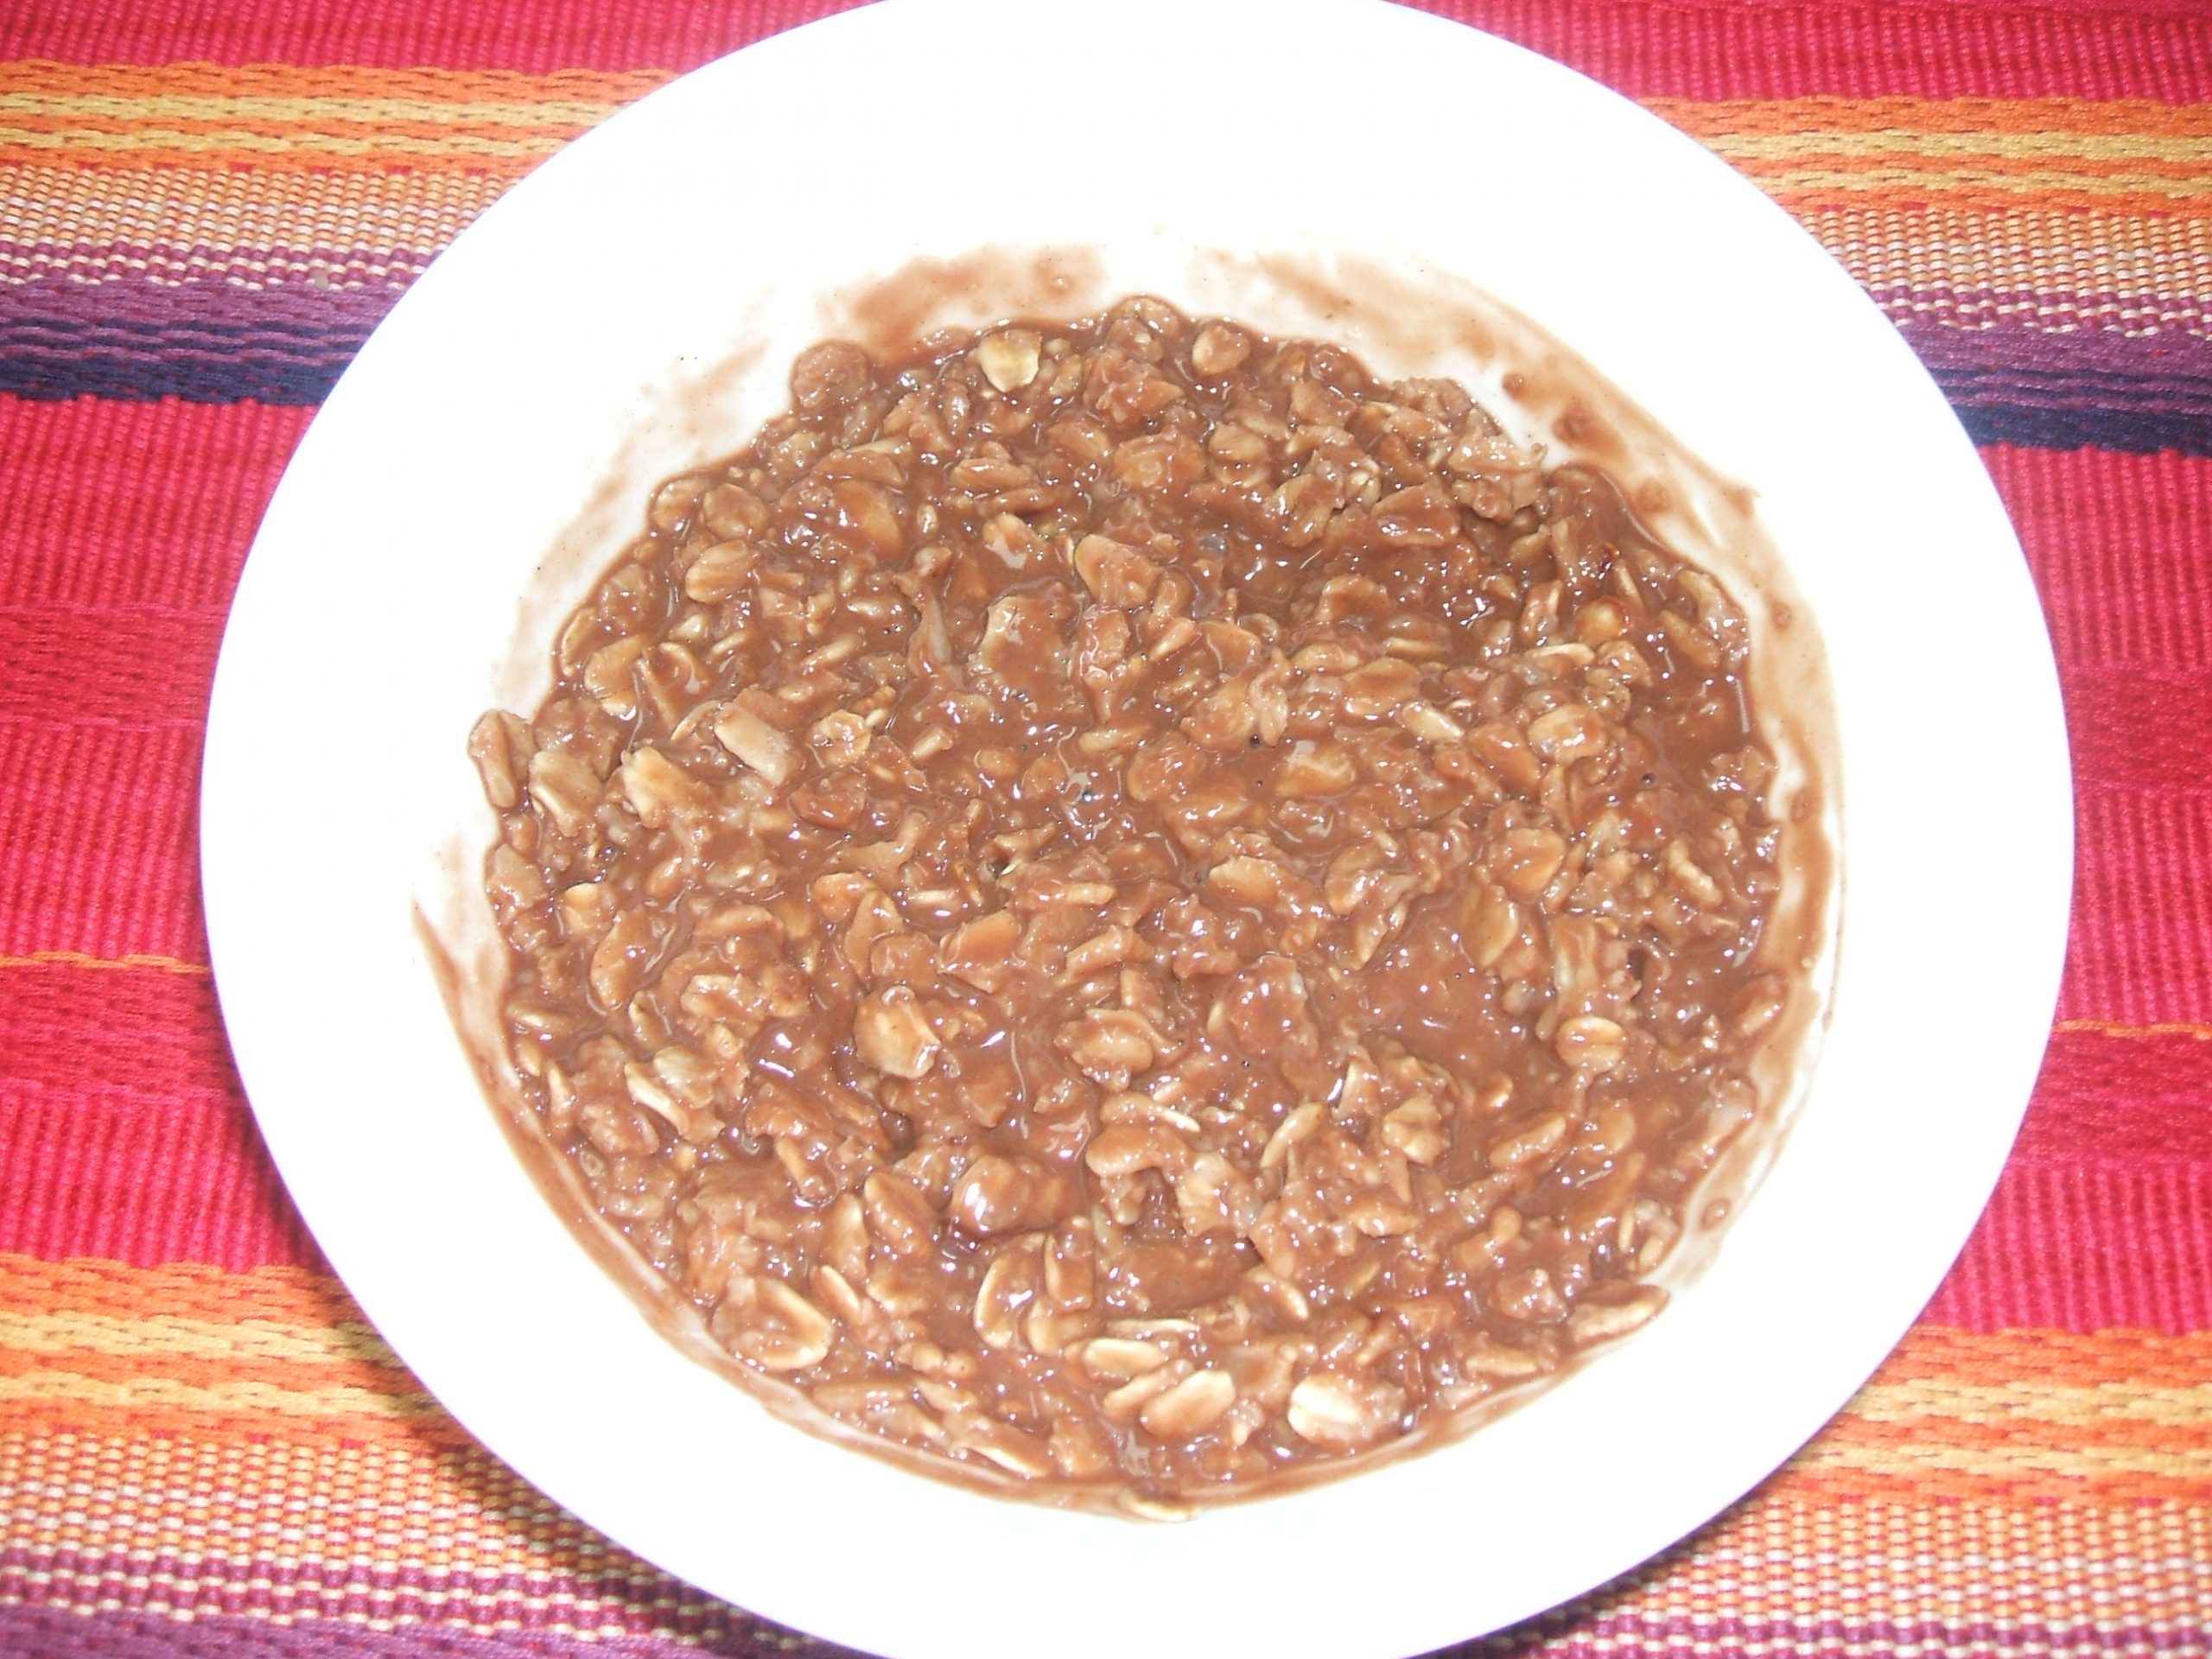 A bowl of chocolate oatmeal